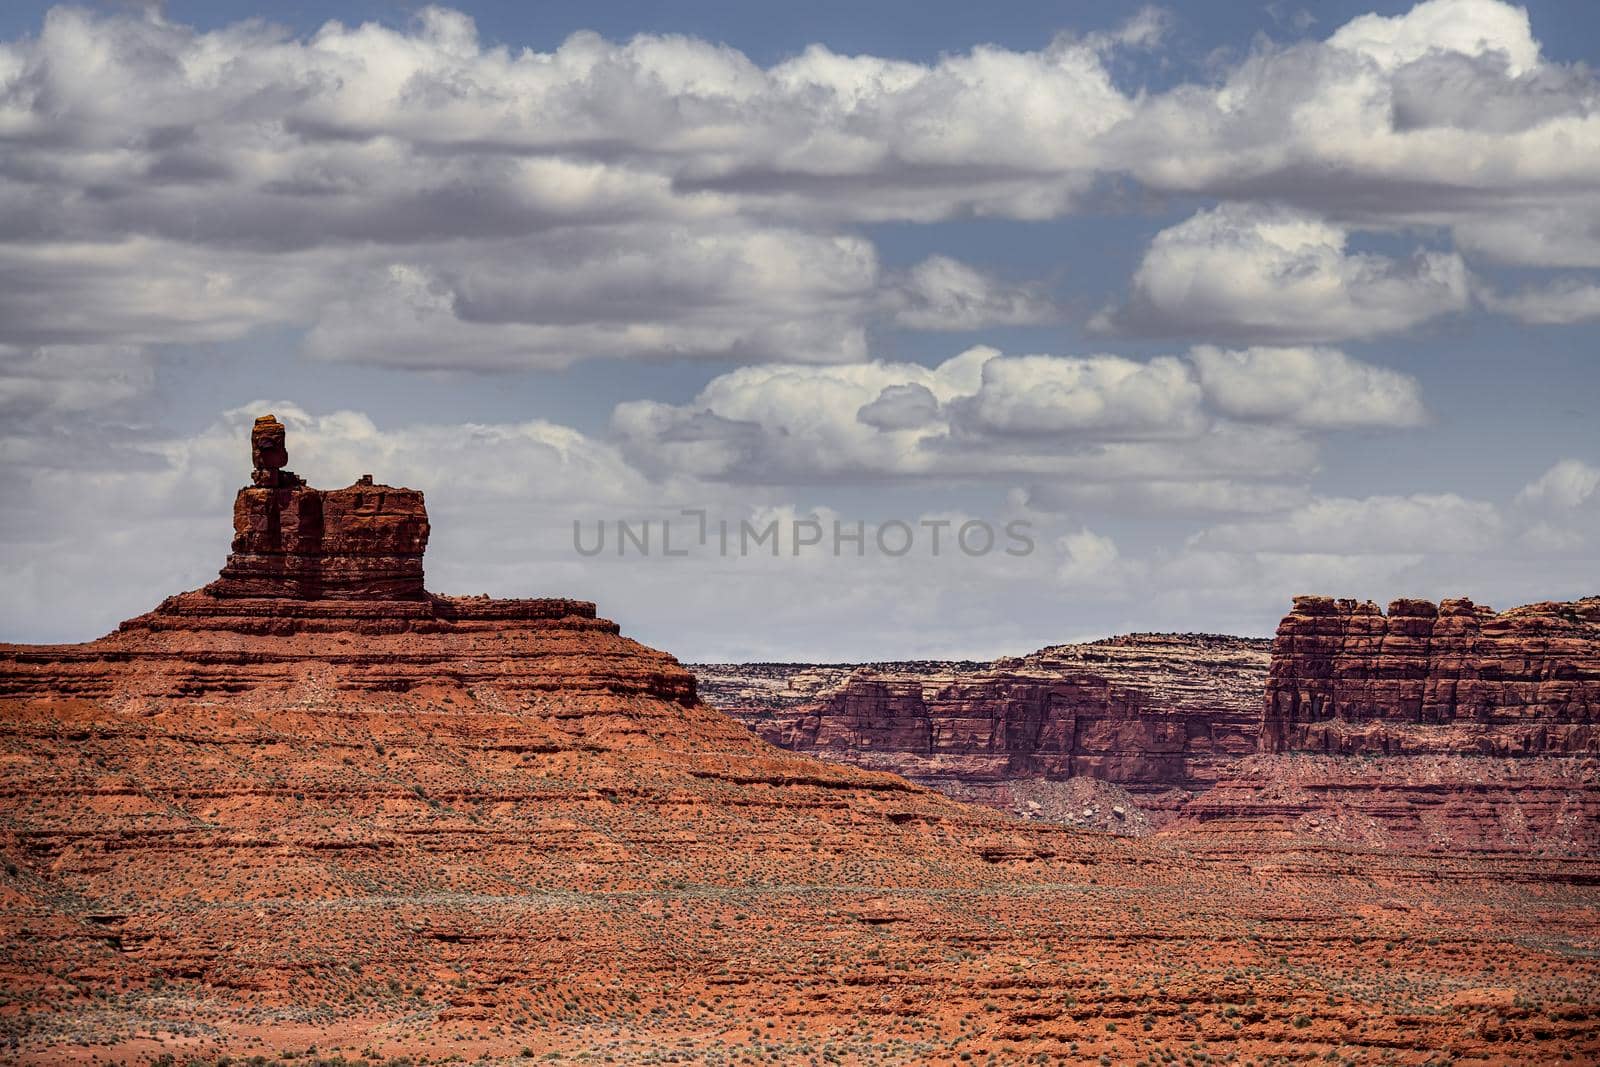 Desolate Monument Valley Desret View by lisaldw